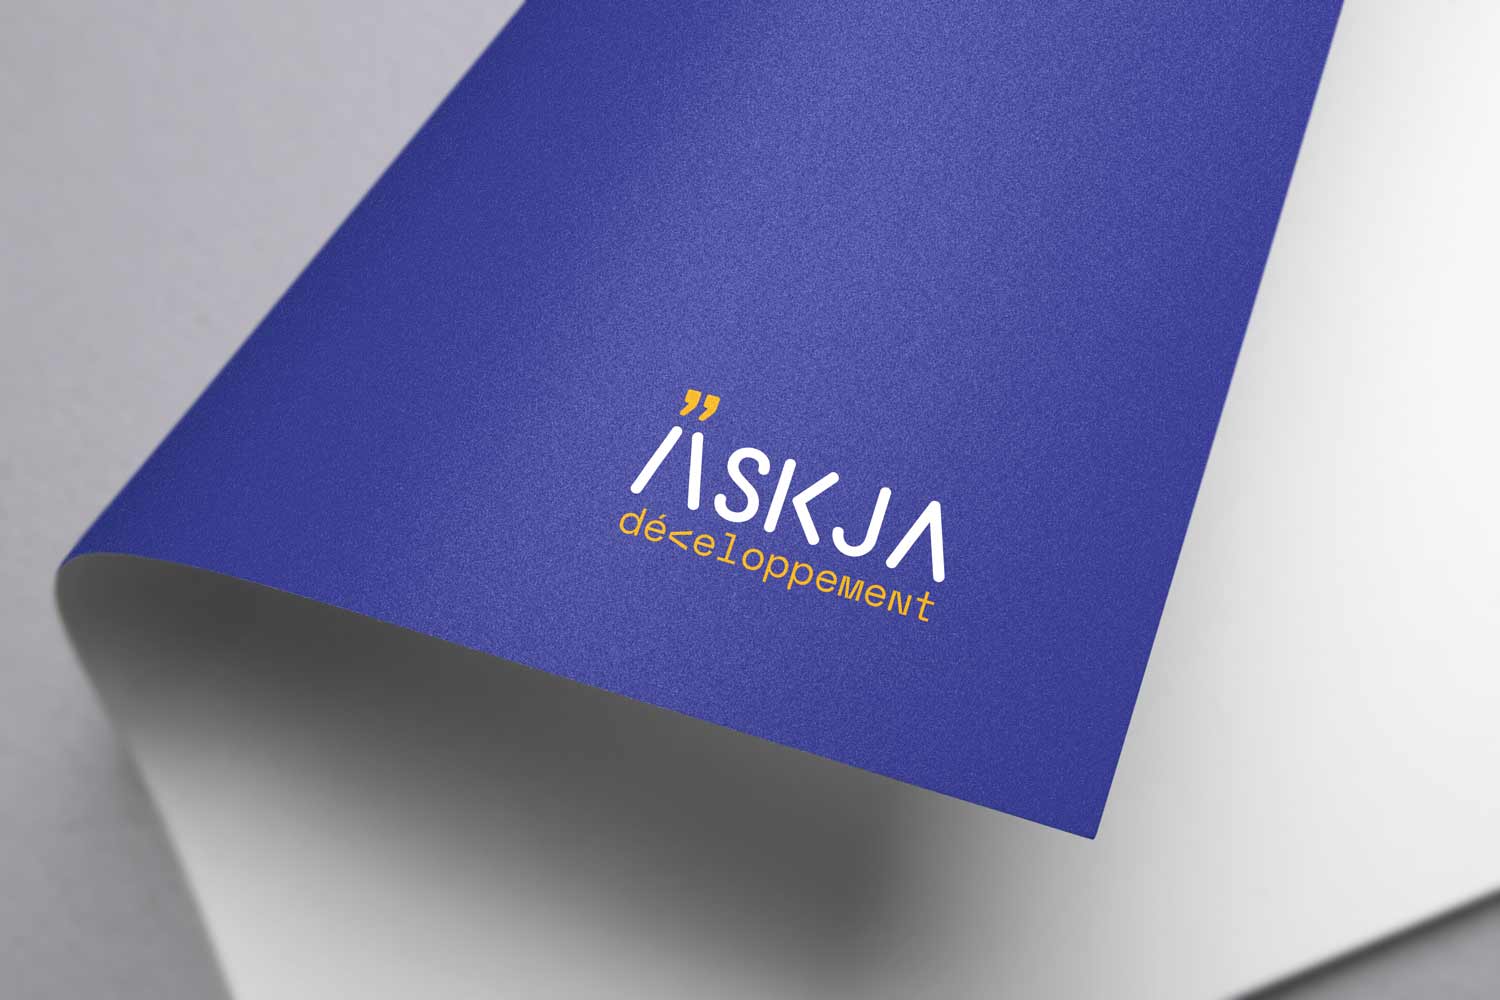 Askja développement - mockup logo fond coloré